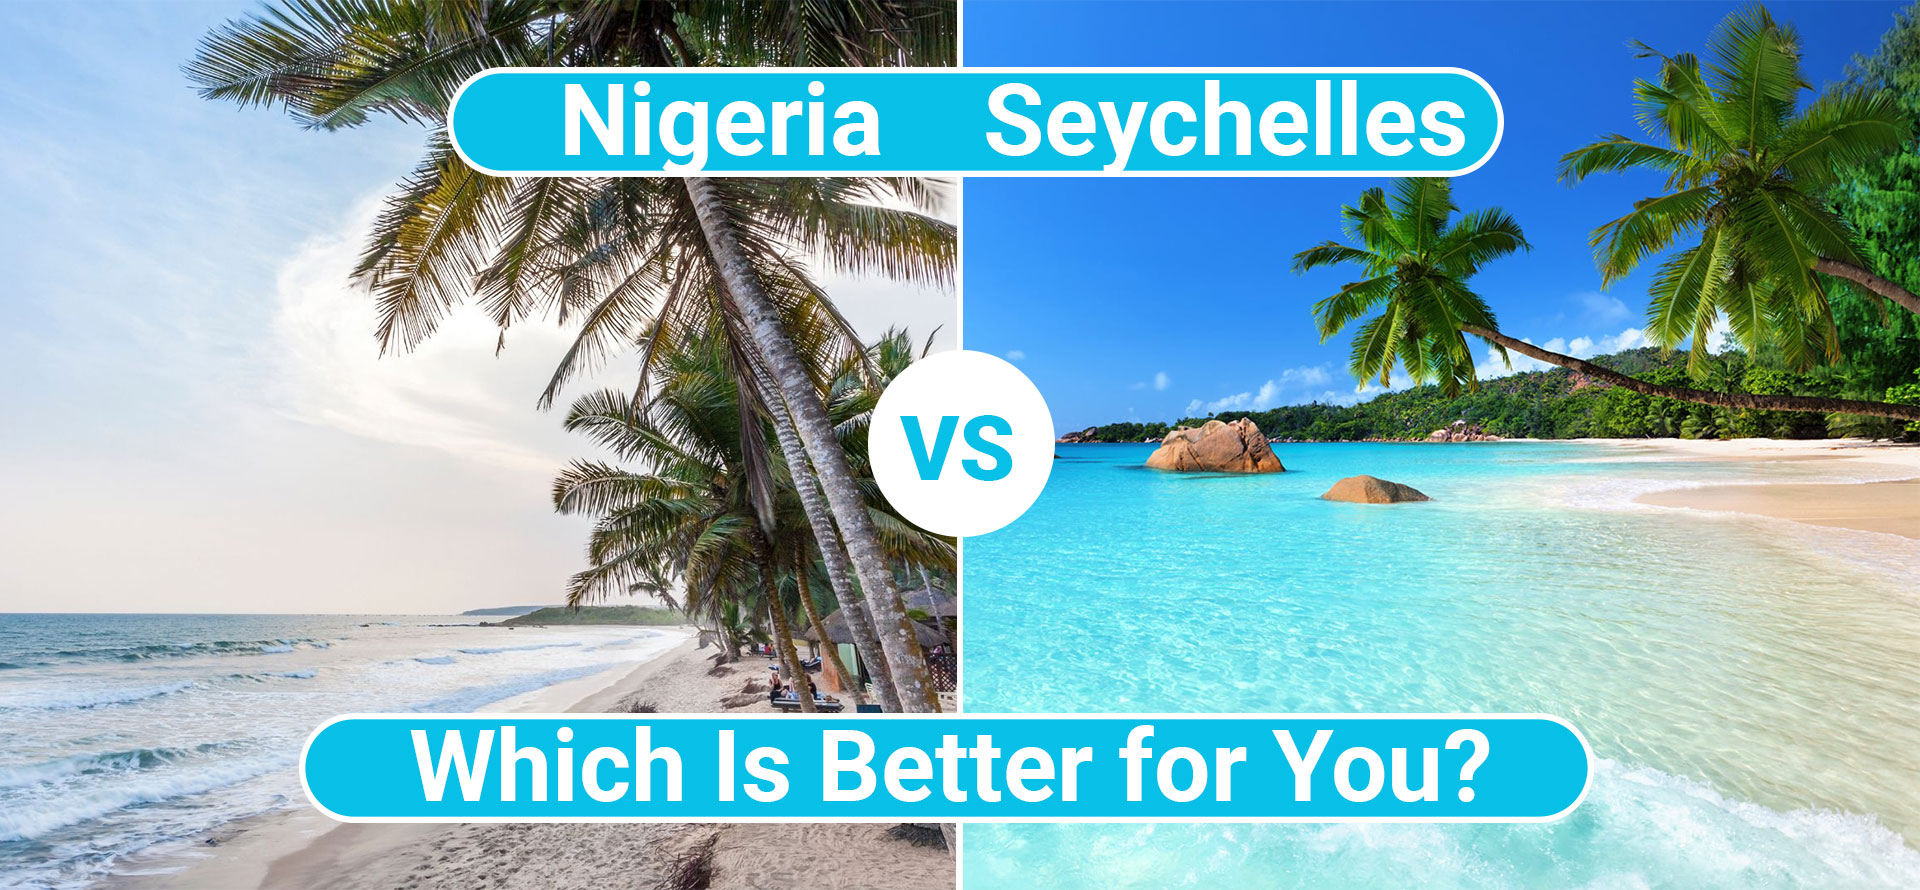 Nigeria vs Seychelles.